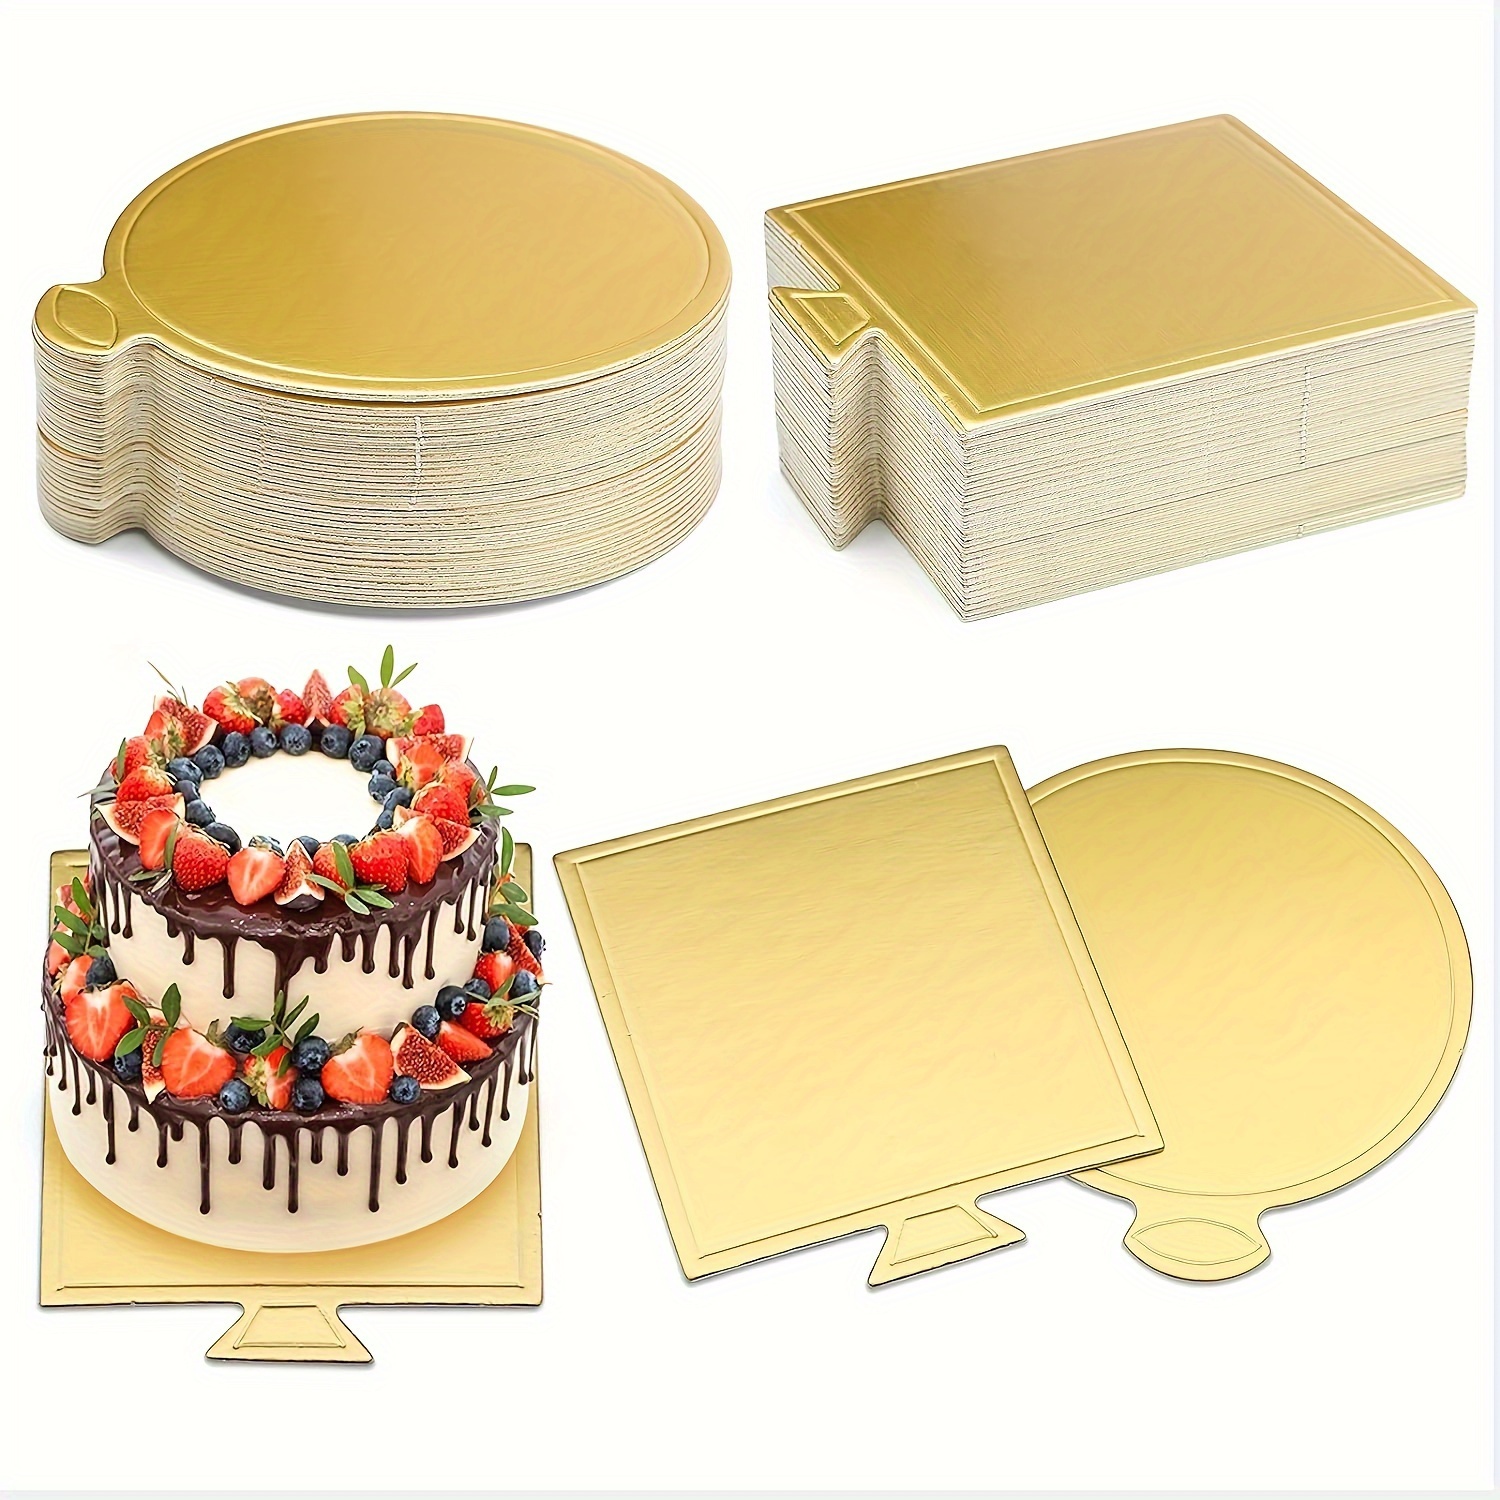 Paquete de 25 tableros redondos resistentes de 10 pulgadas para tartas,  placas de cartón dorado con base festoneada, paquete de 25 (dorado)